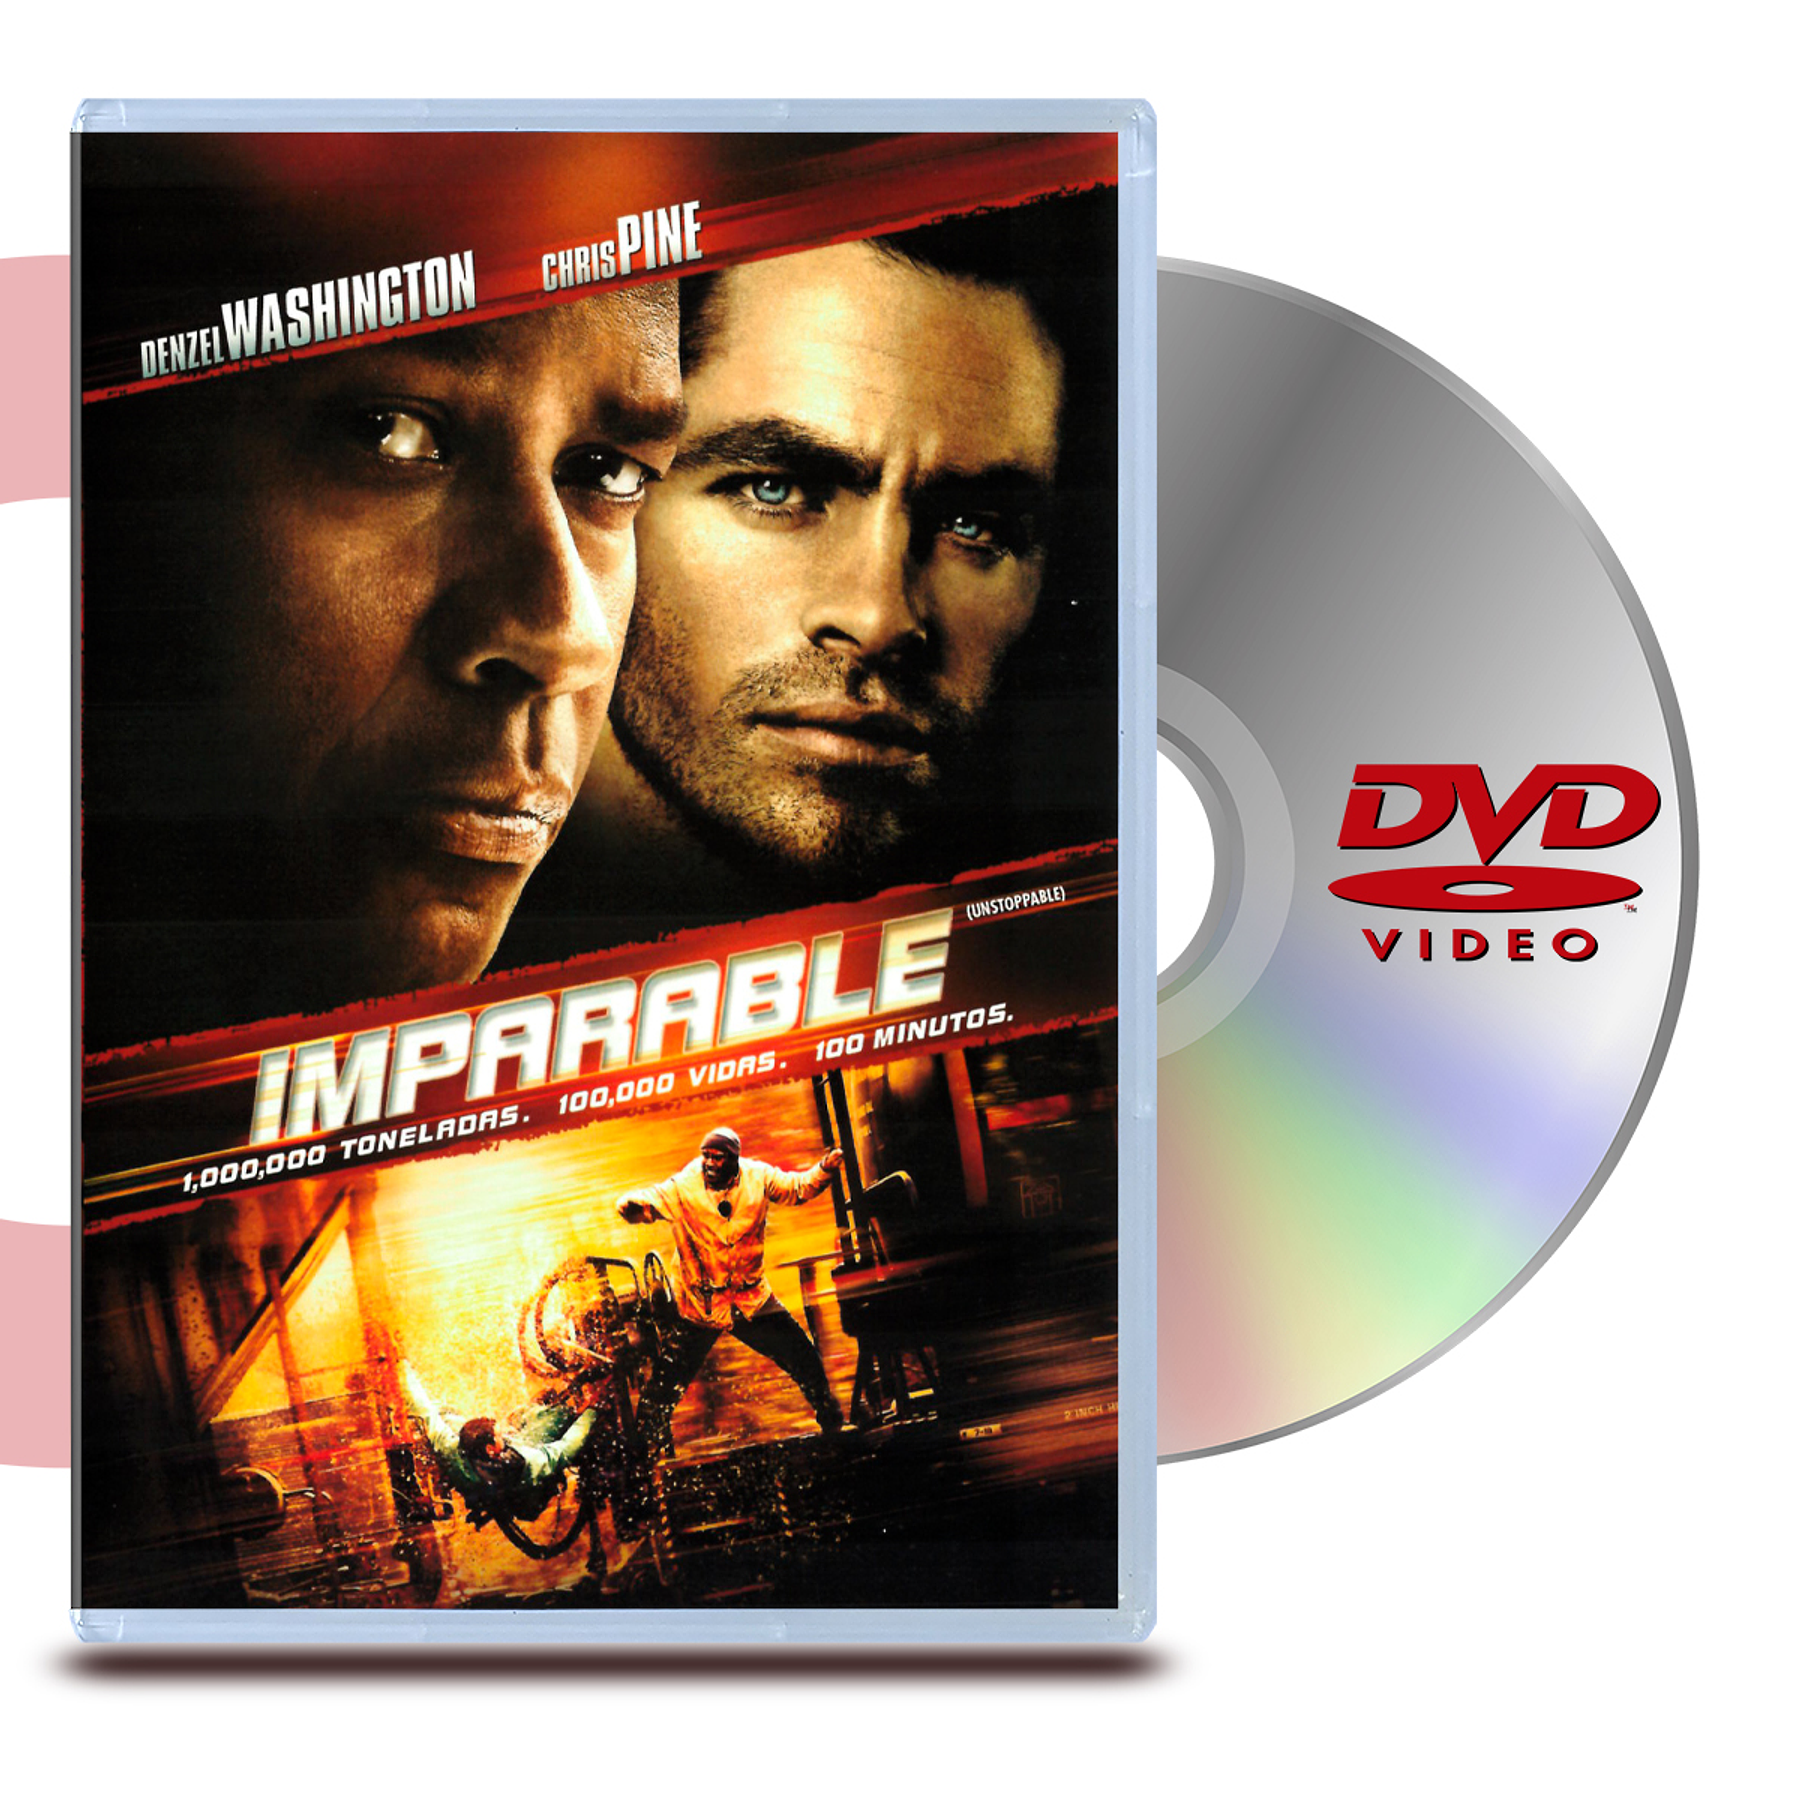 DVD IMPARABLE (OFERTA)